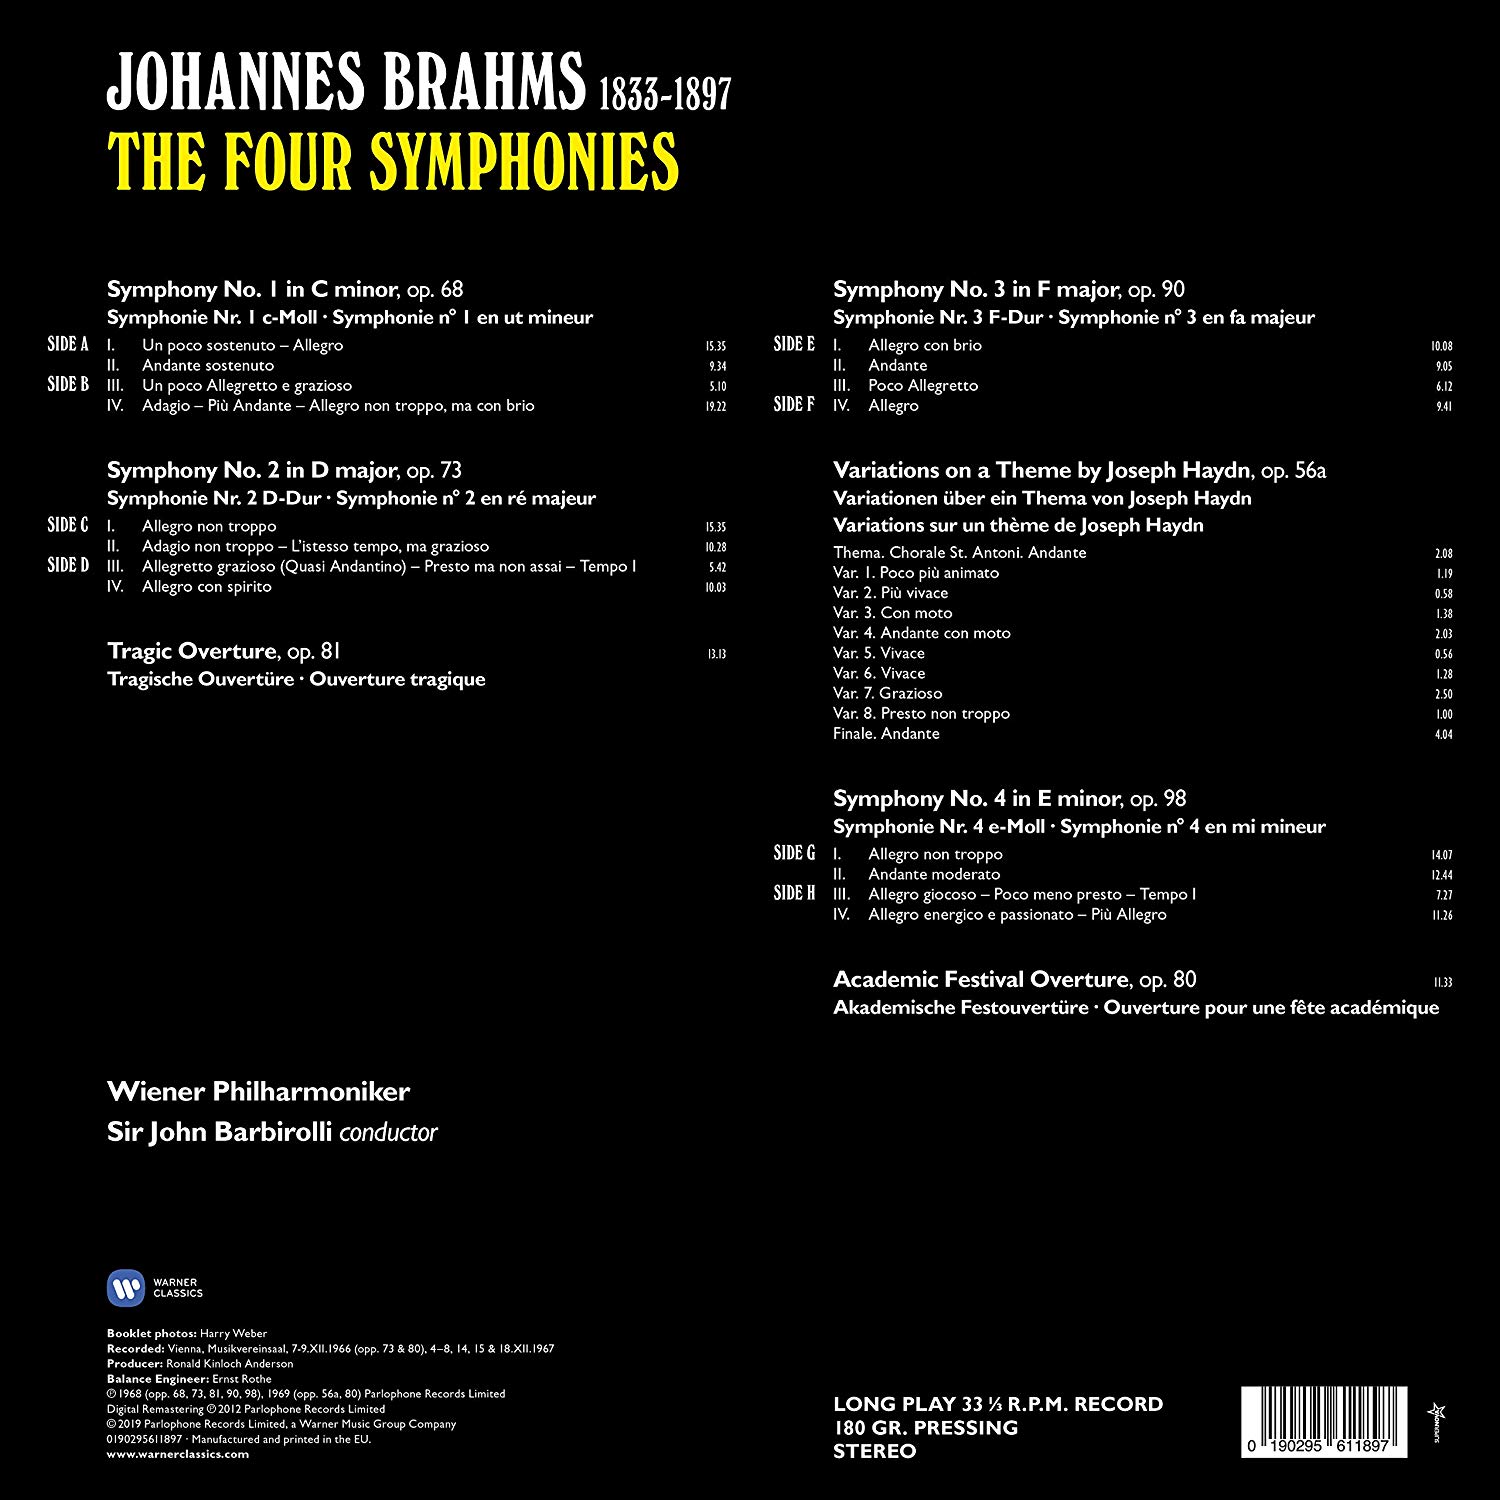 John Barbirolli 브람스: 교향곡 전곡 (Brahms: Four Symphonies) [4LP 박스세트]